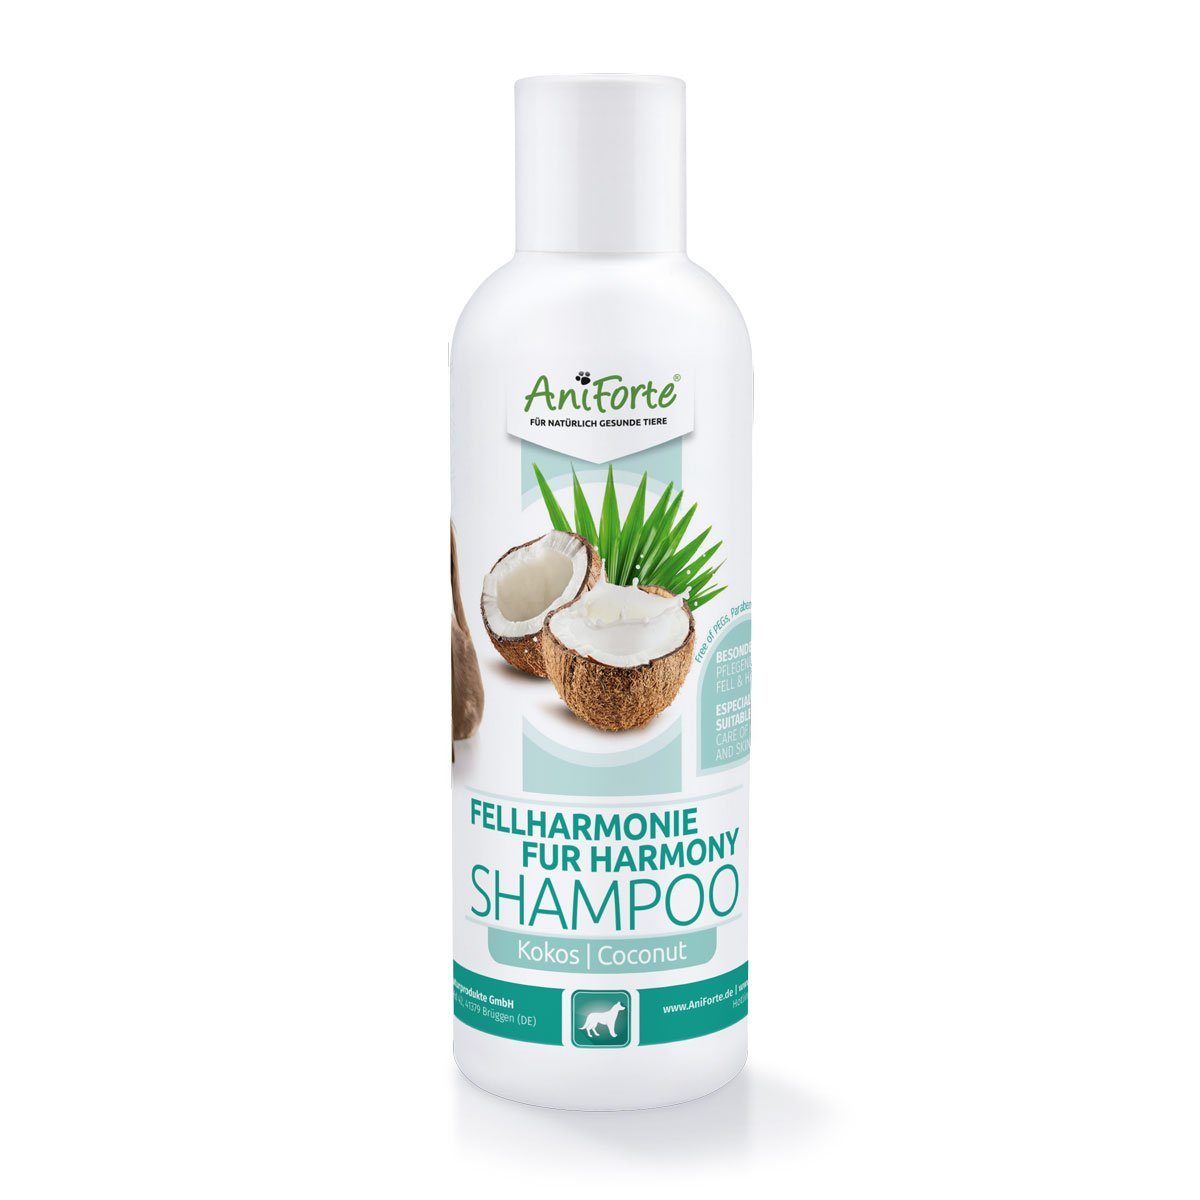 Fur Harmony Coconut Shampoo for Dogs - 200ml - AniForte UK